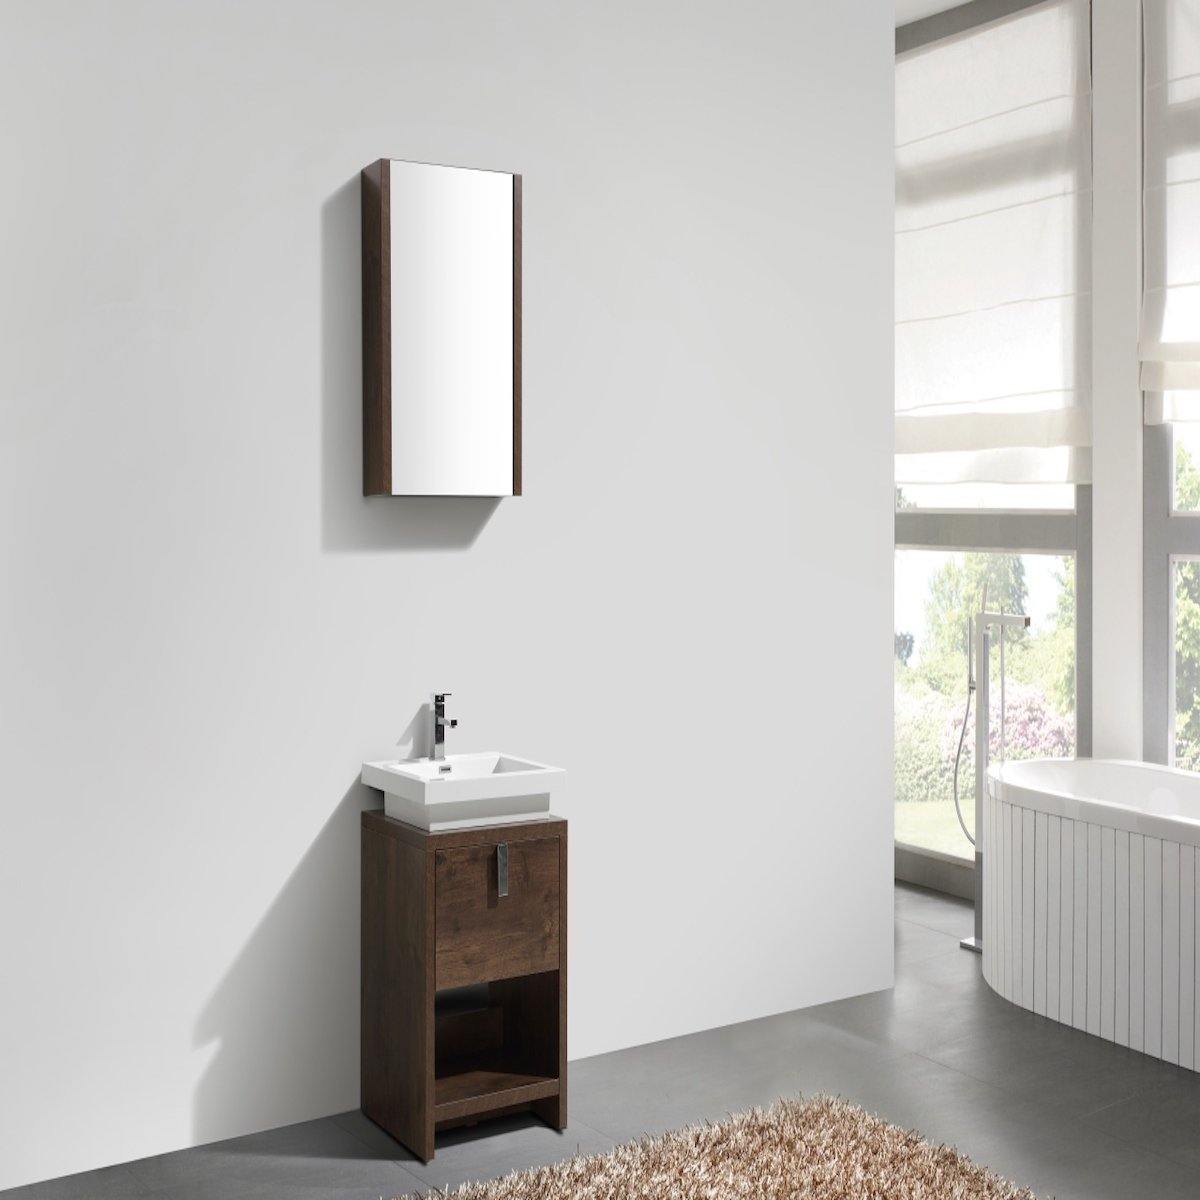 KubeBath Levi 24" Rose Wood Single Vanity with Cubby Hole L600RW in Bathroom #finish_rose wood